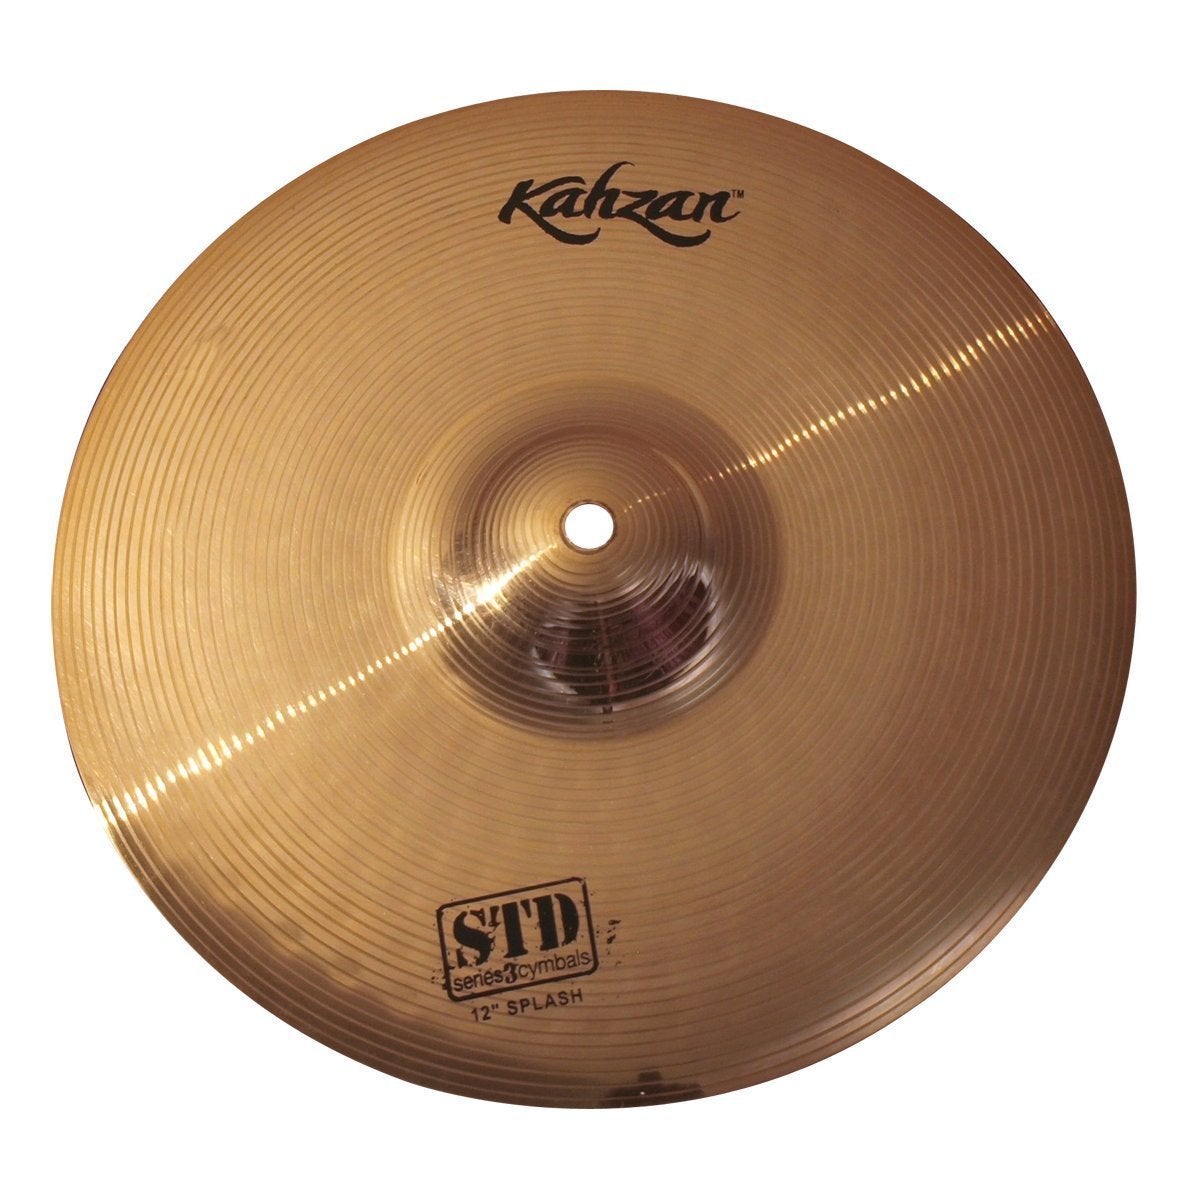 Kahzan 'STD-3 Series' Splash Cymbal (12")-KC-STD3-12S